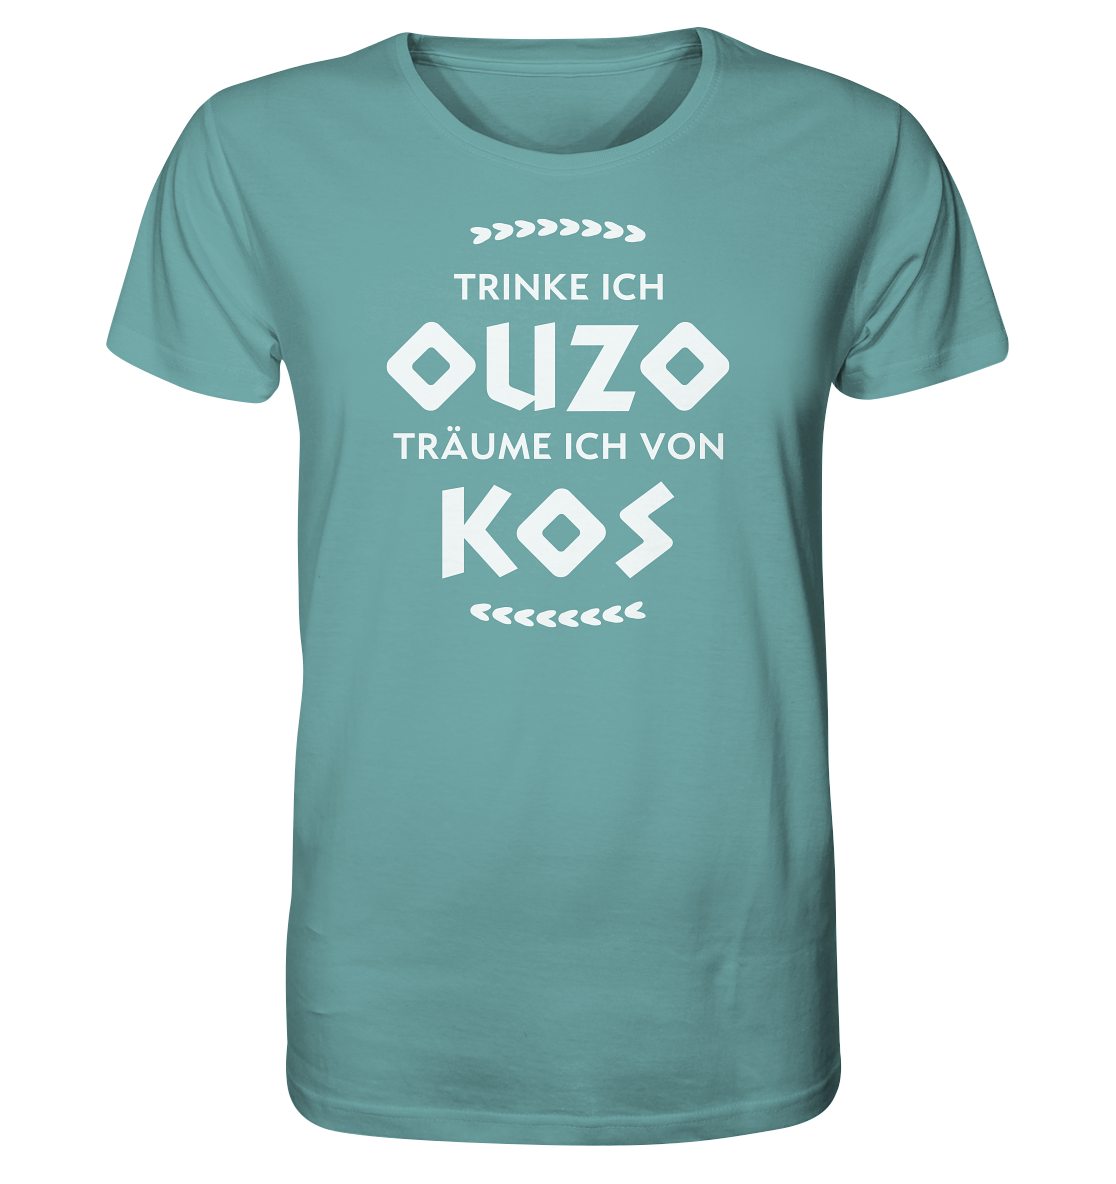 If I drink Ouzo I dream of Kos - Organic Shirt